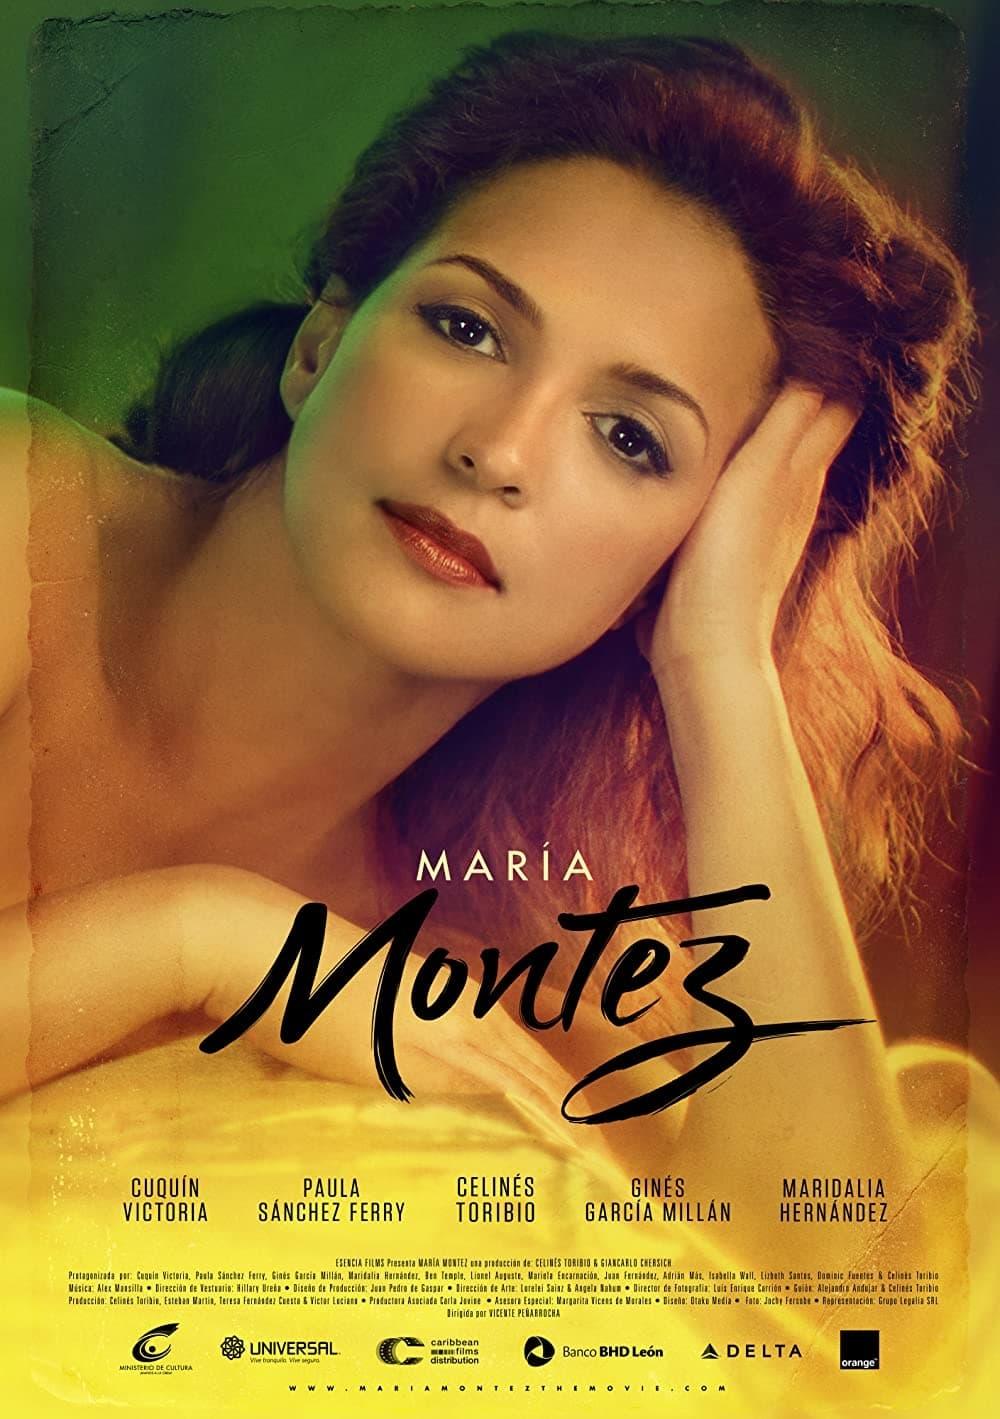 María Montez: The Movie poster